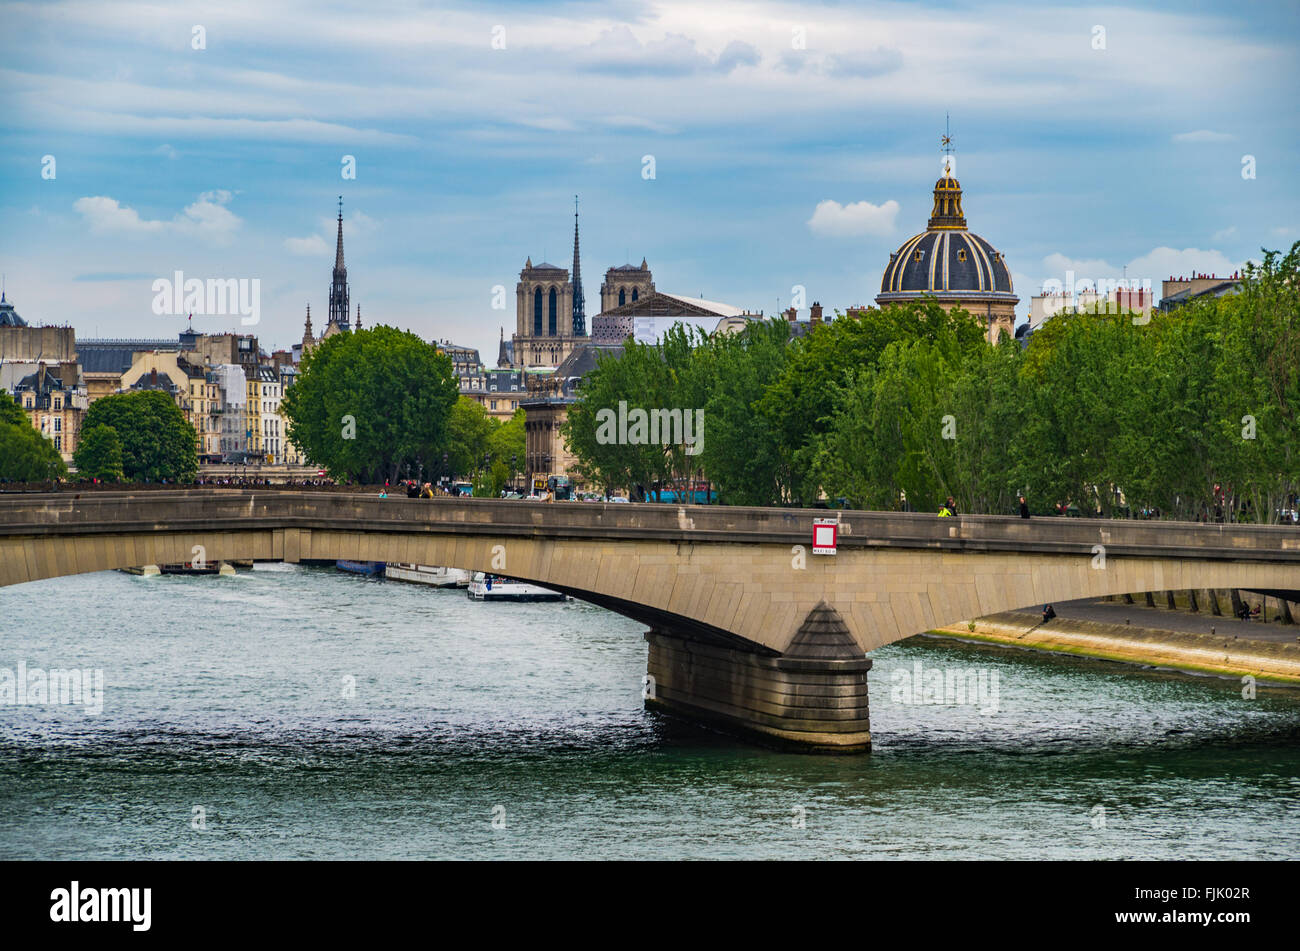 Paris France 2014 April 22,  Historic building architecture along the banks of the Seine River Stock Photo